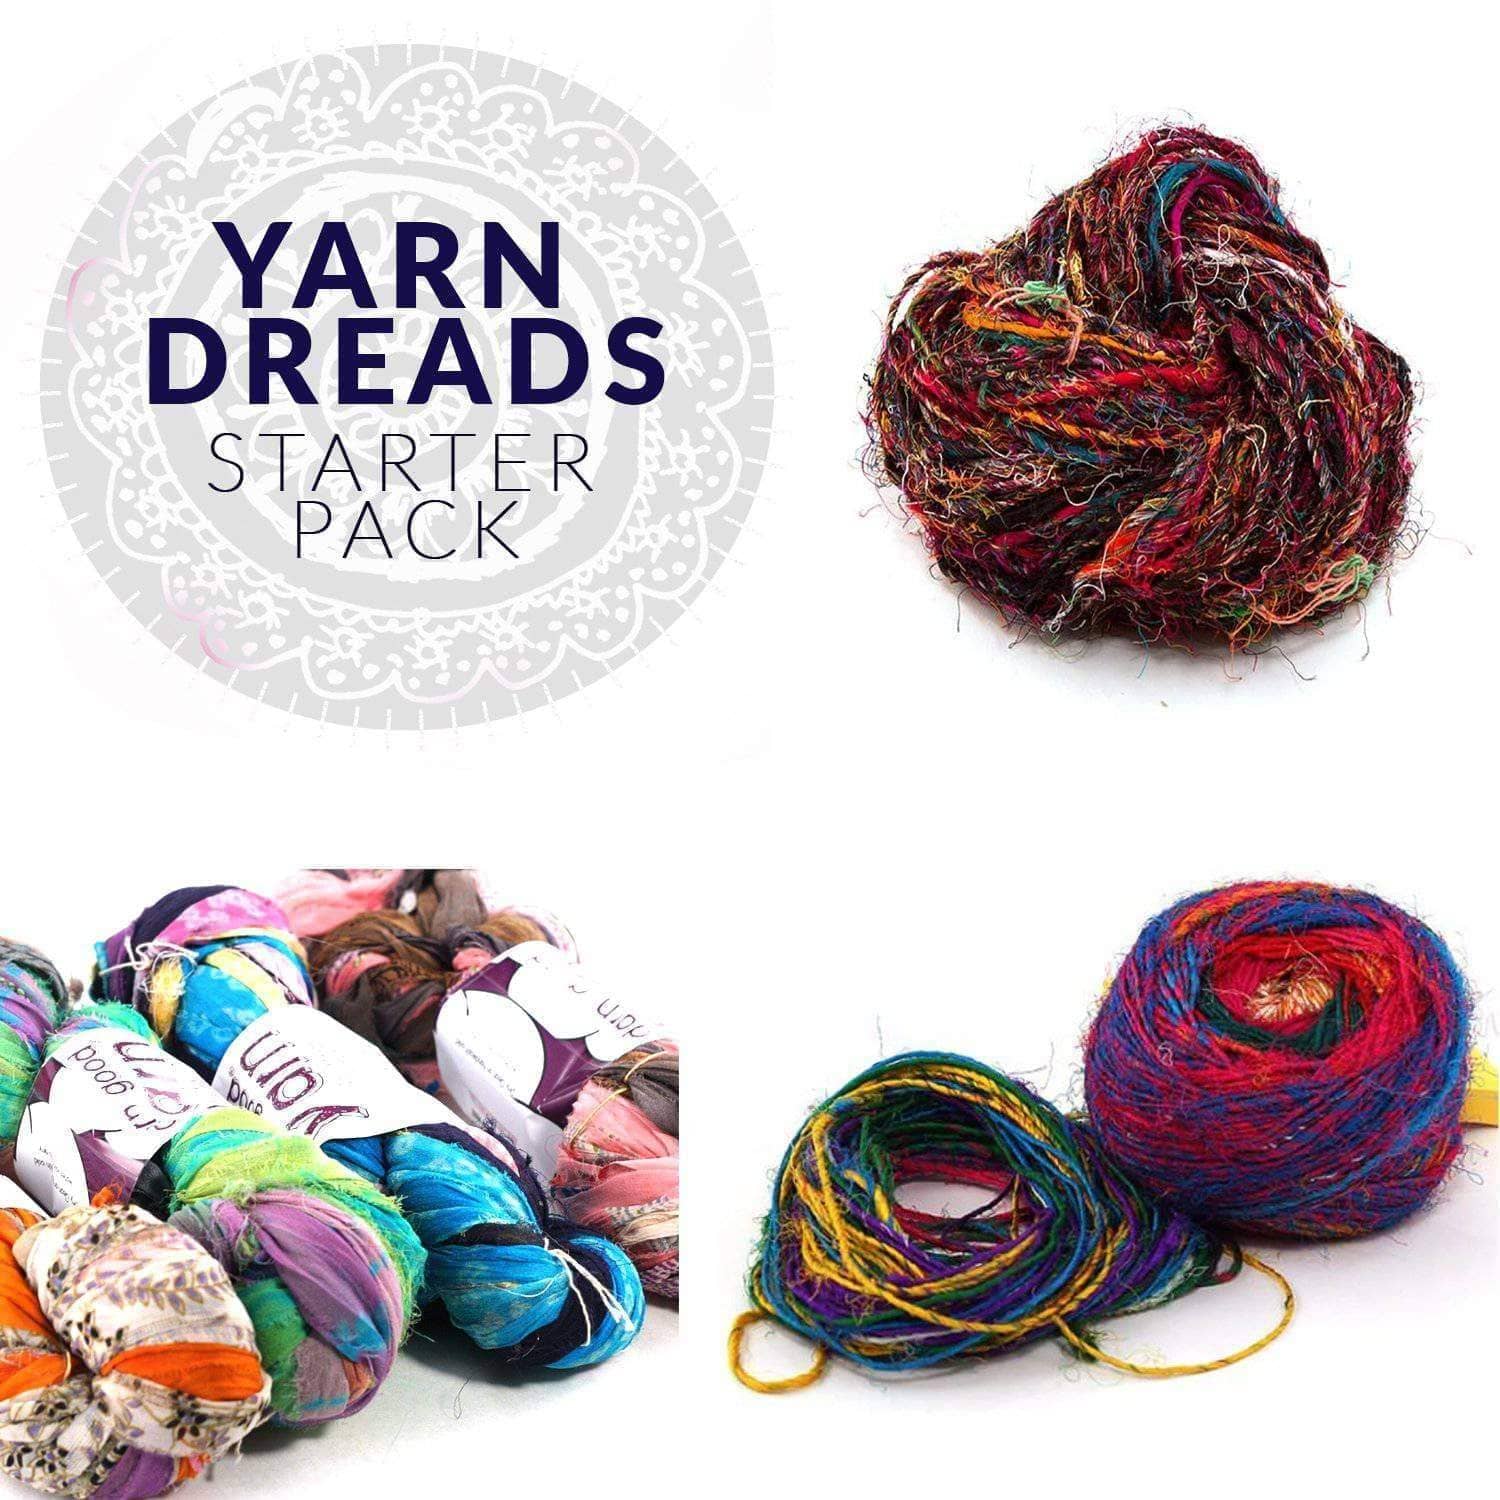 How to Make Yarn Braids and Yarn Dreads - Darn Good Yarn